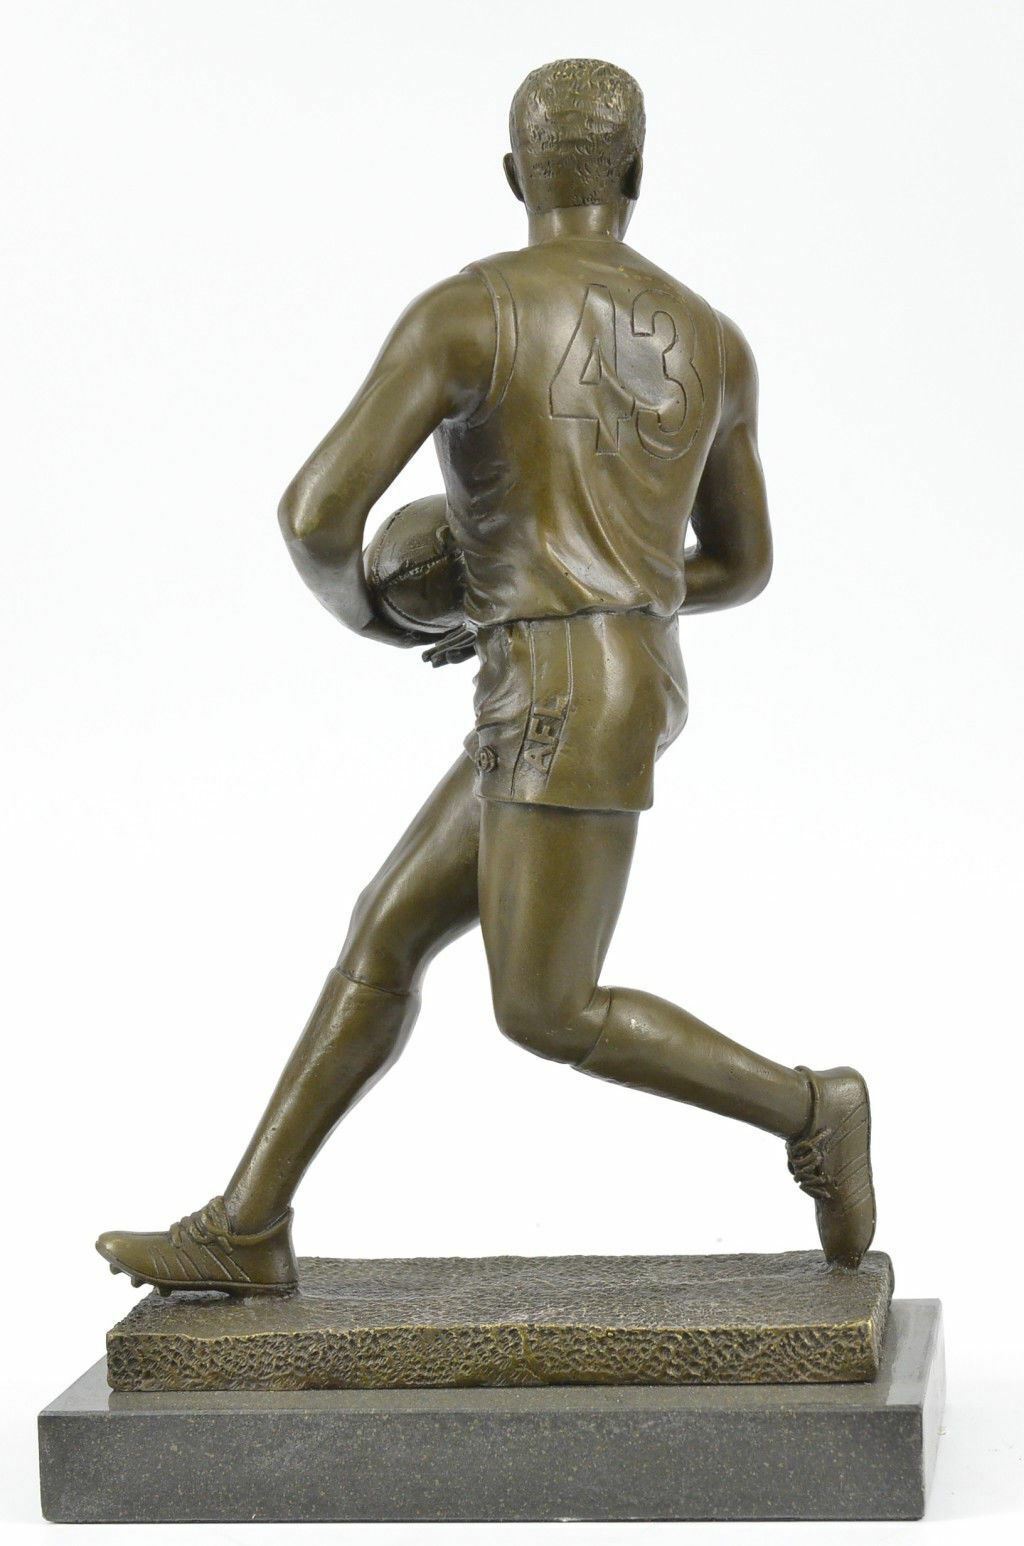 Australian Rugby Player World Cup Bronze Sculpture Statue Decorative Figurine